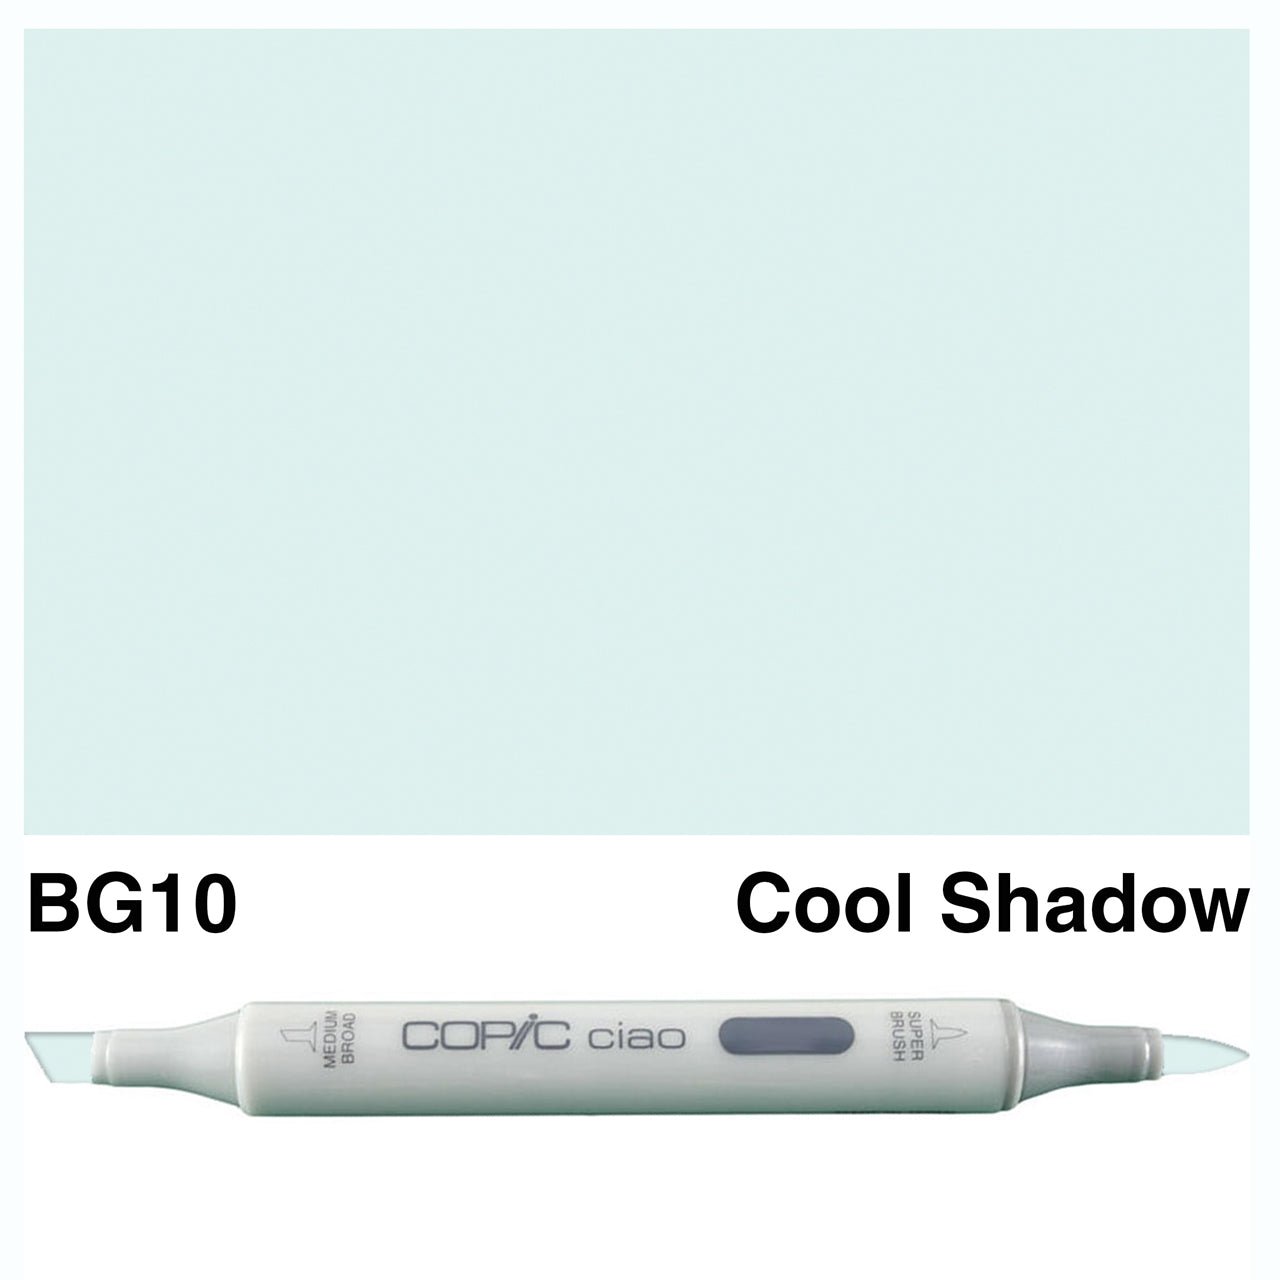 Copic Ciao BG10 Cool Shadow - theartshop.com.au